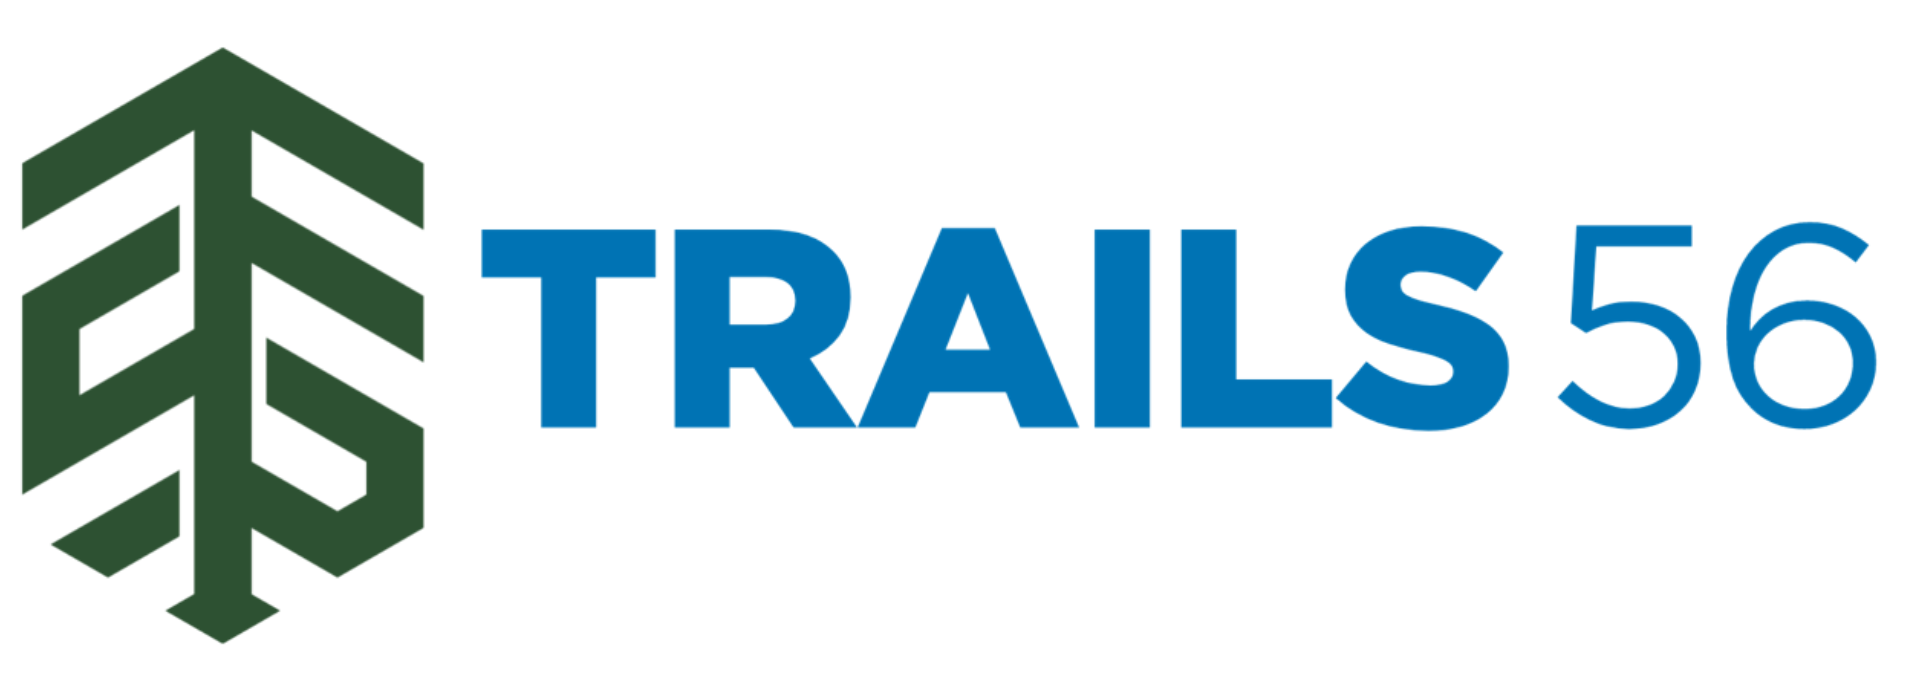 Trails 56 Logo Horizontal 2023_1920x692